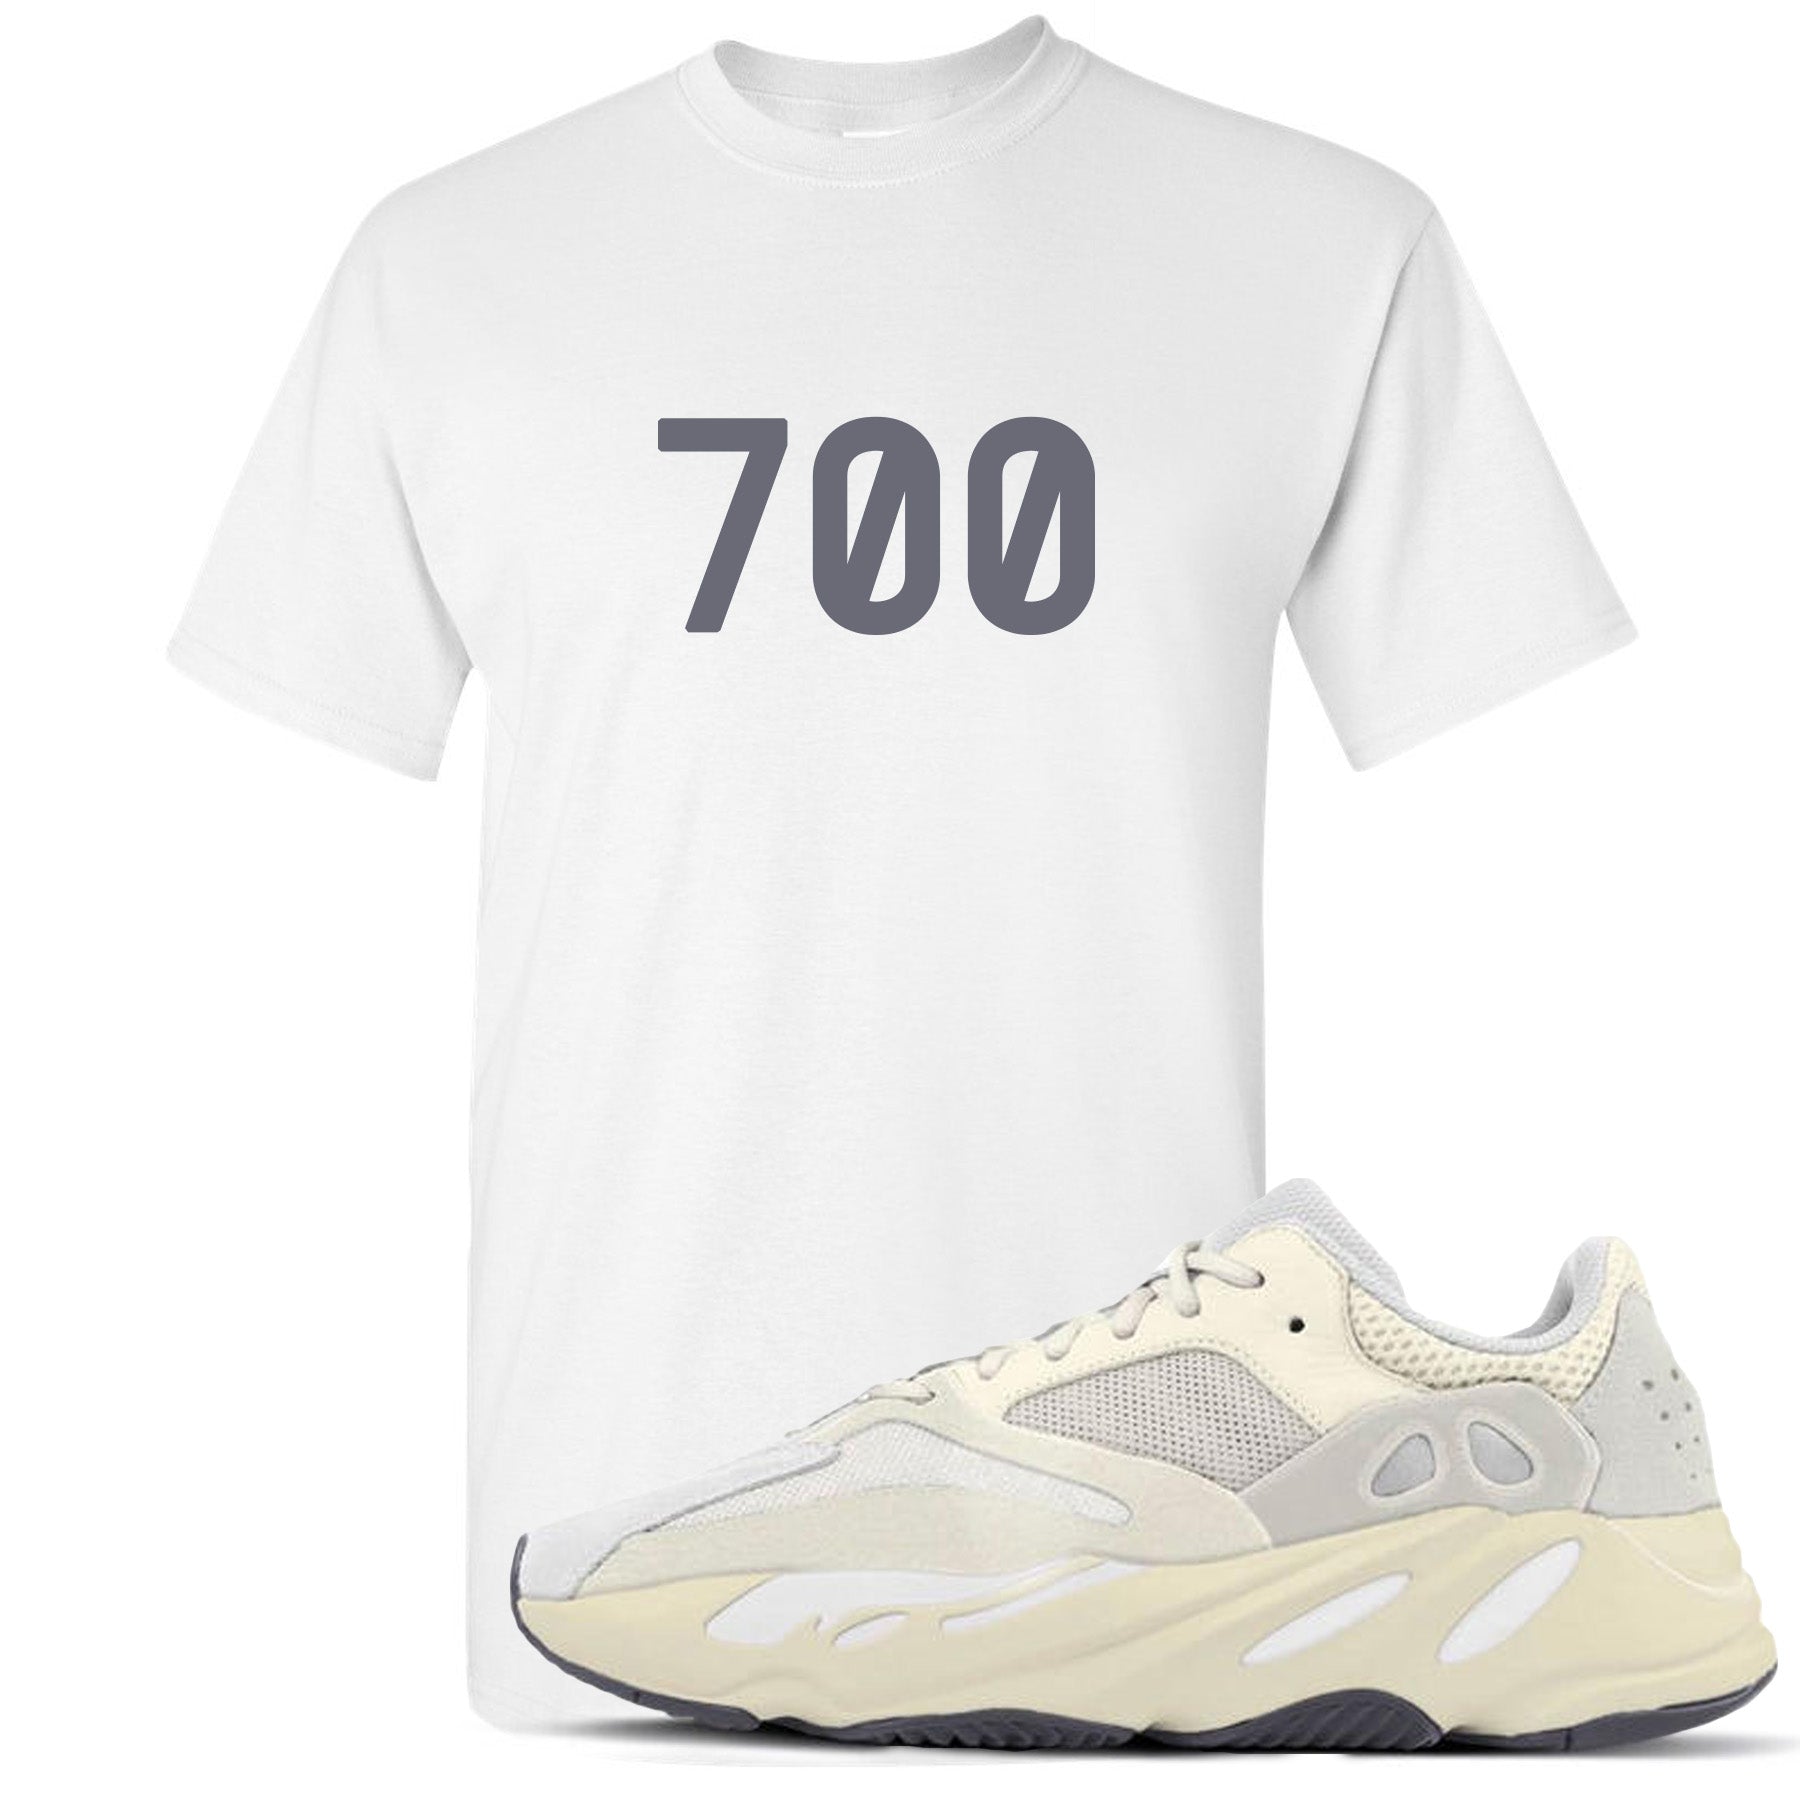 yeezy boost 700 shirts